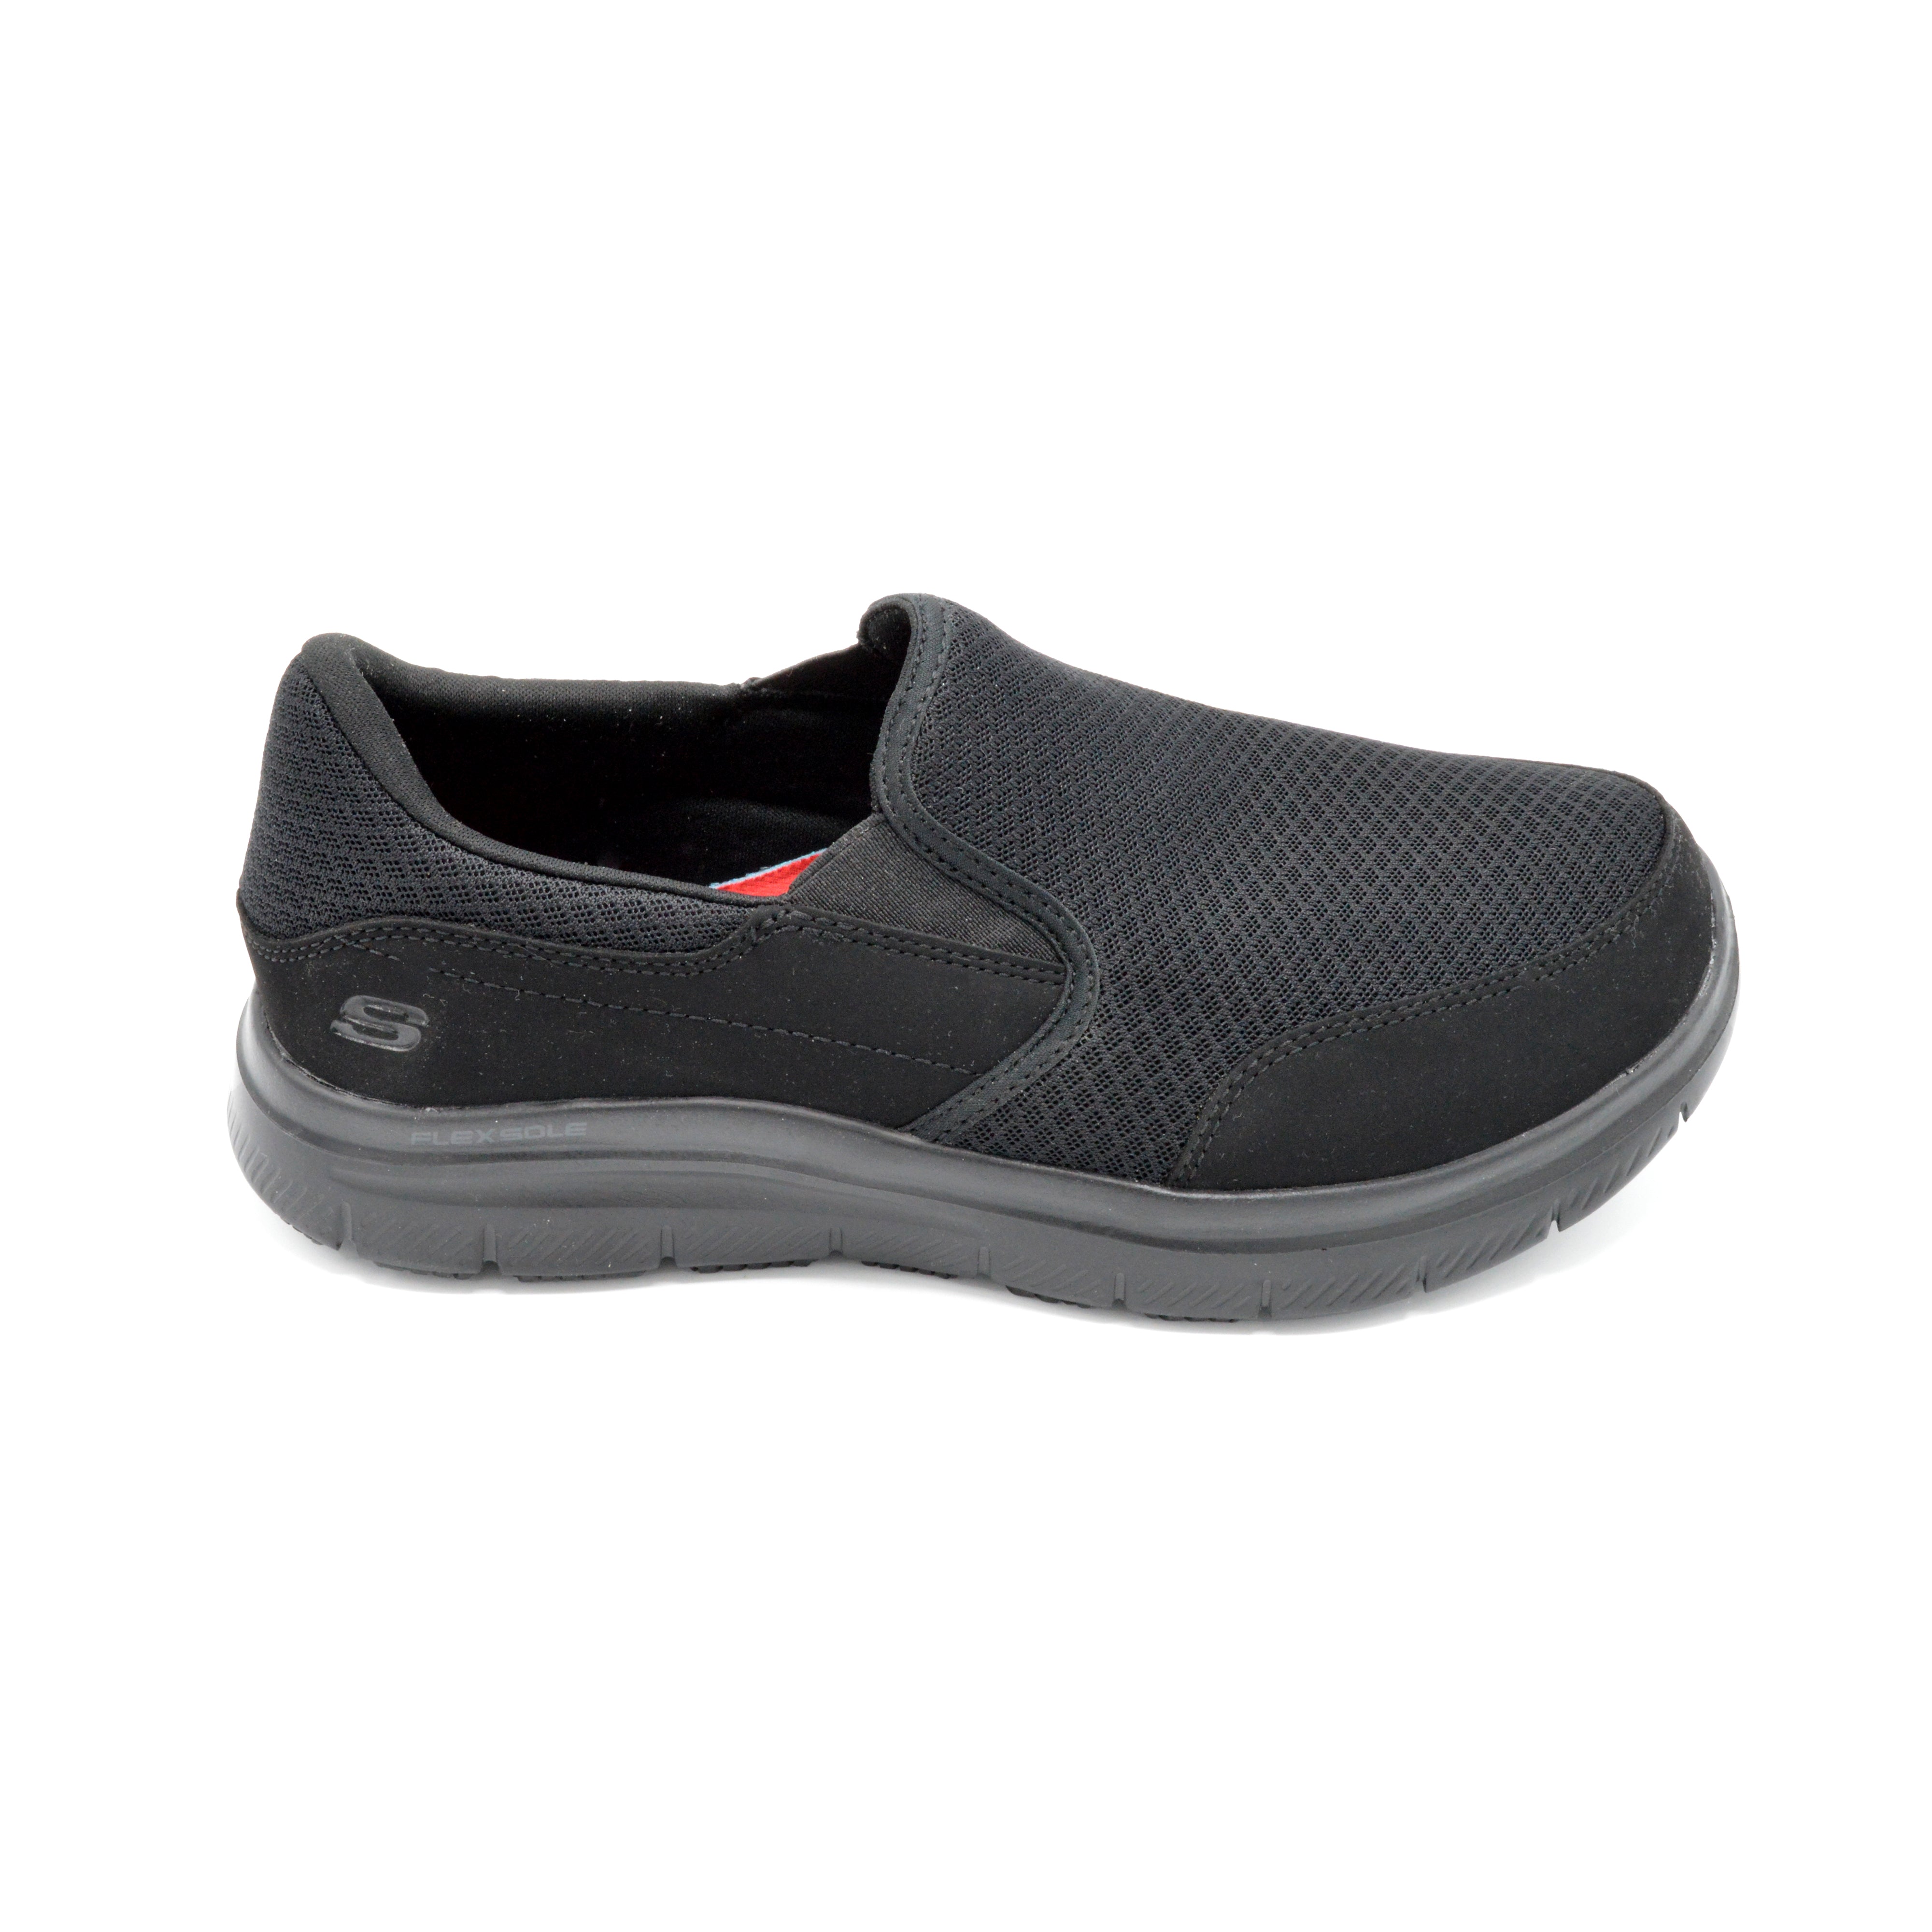 Slip Resistant Work Shoes Near Me Best Sale | medialit.org